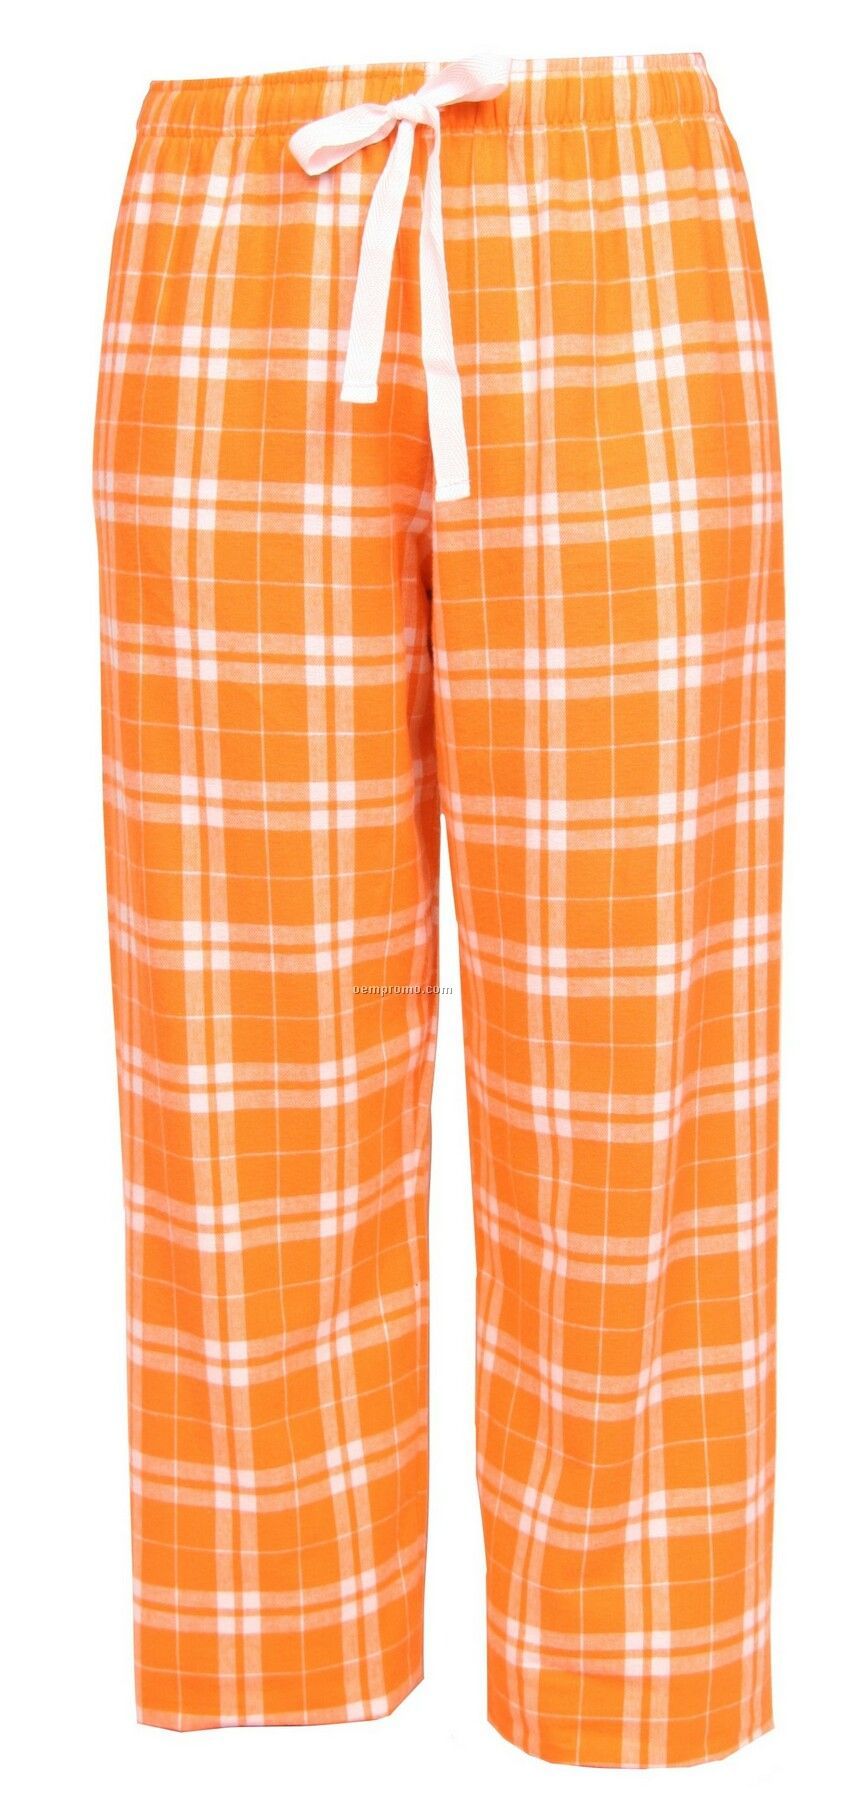 Adult Team Pride Flannel Pant In Orange & White Plaid